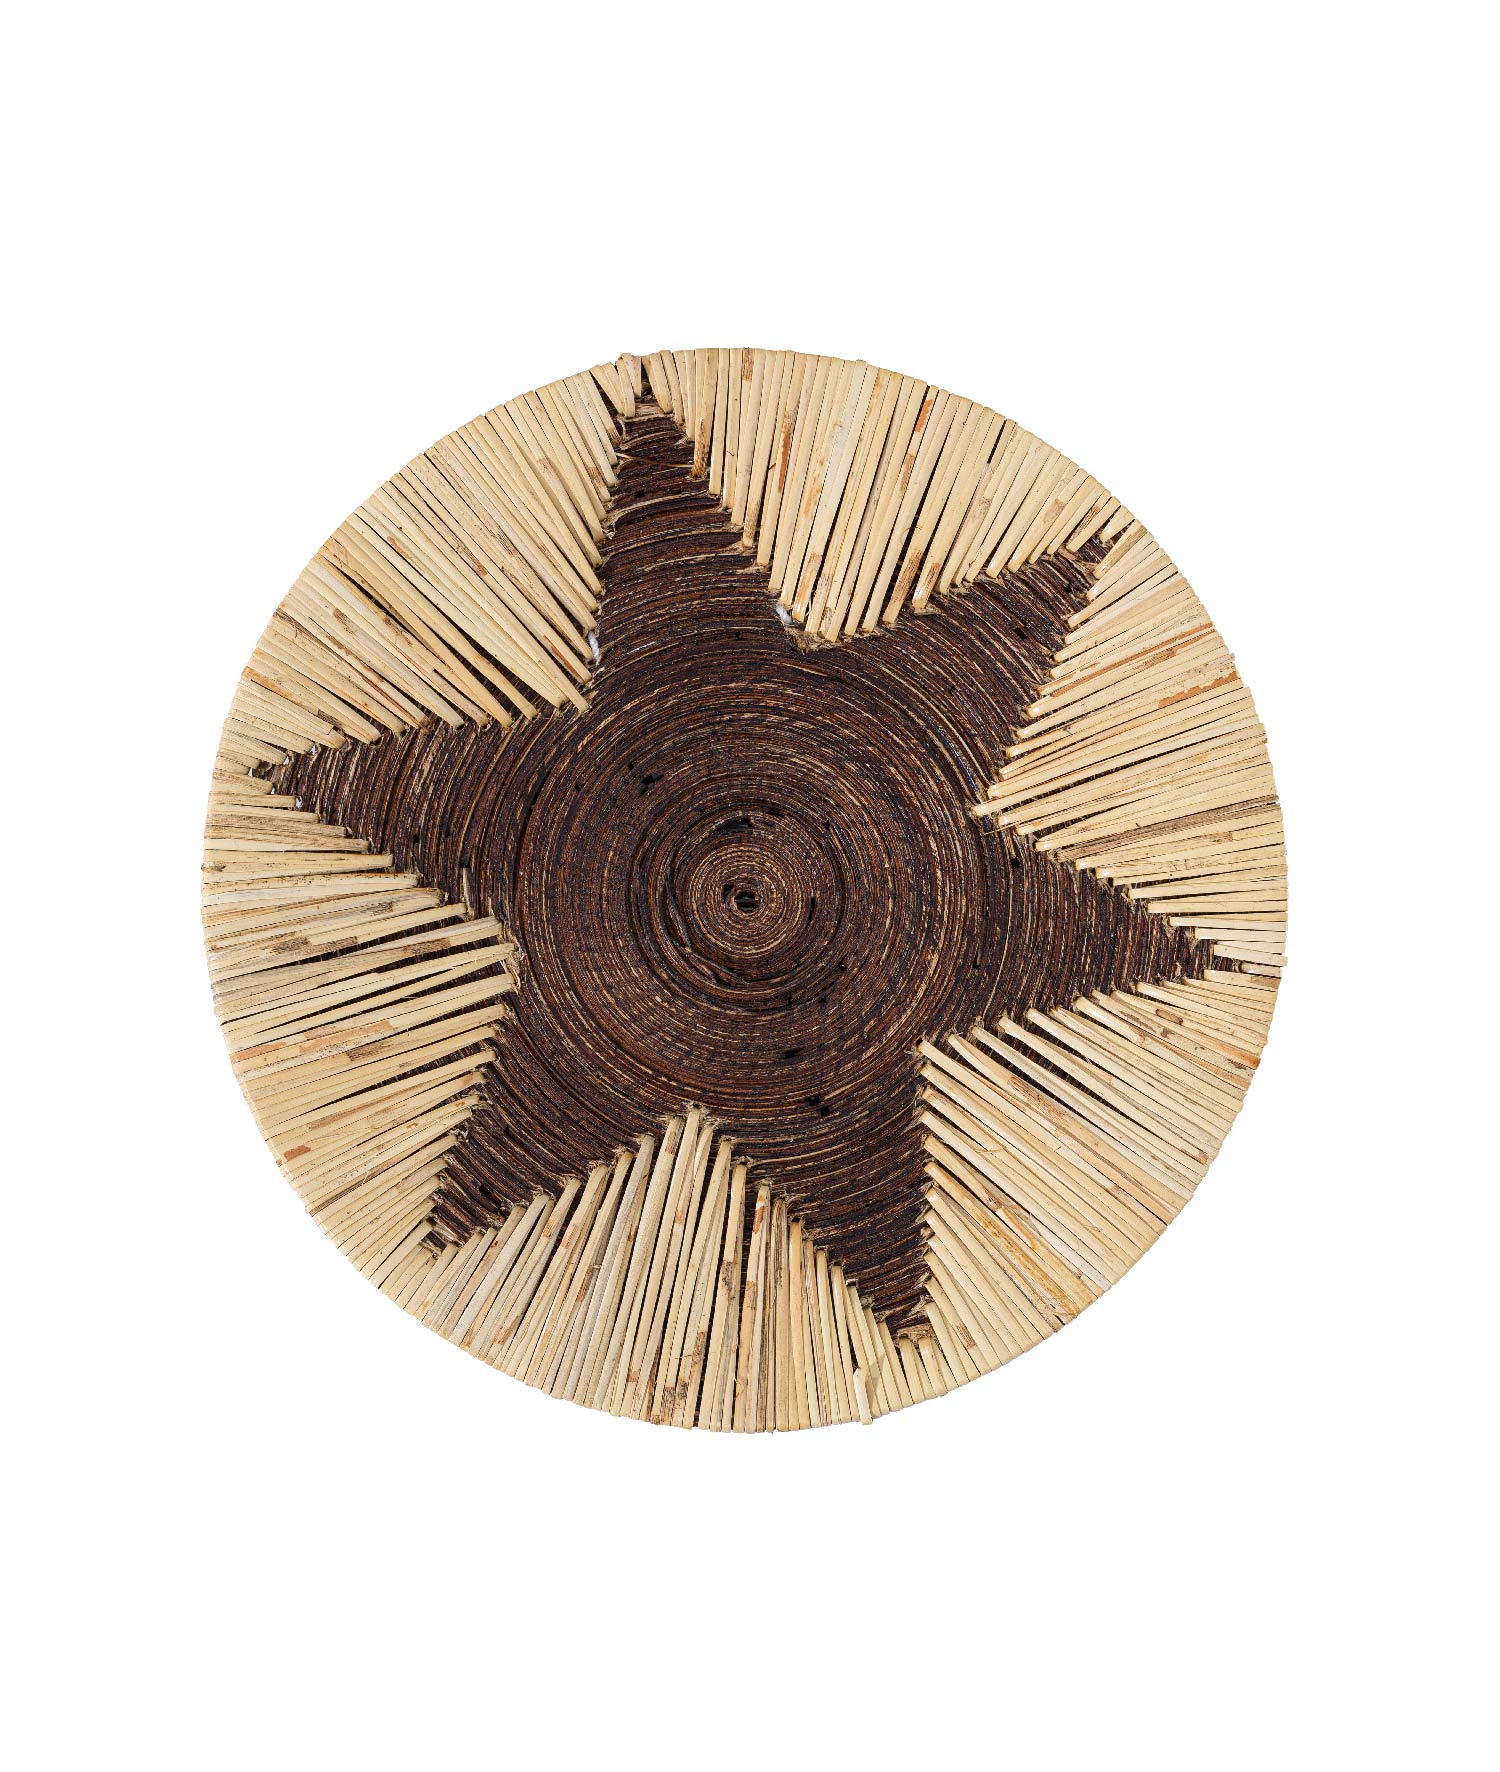 Meander Natural Bamboo Afrikan Handmade Star Wall Plate Decor 30cm